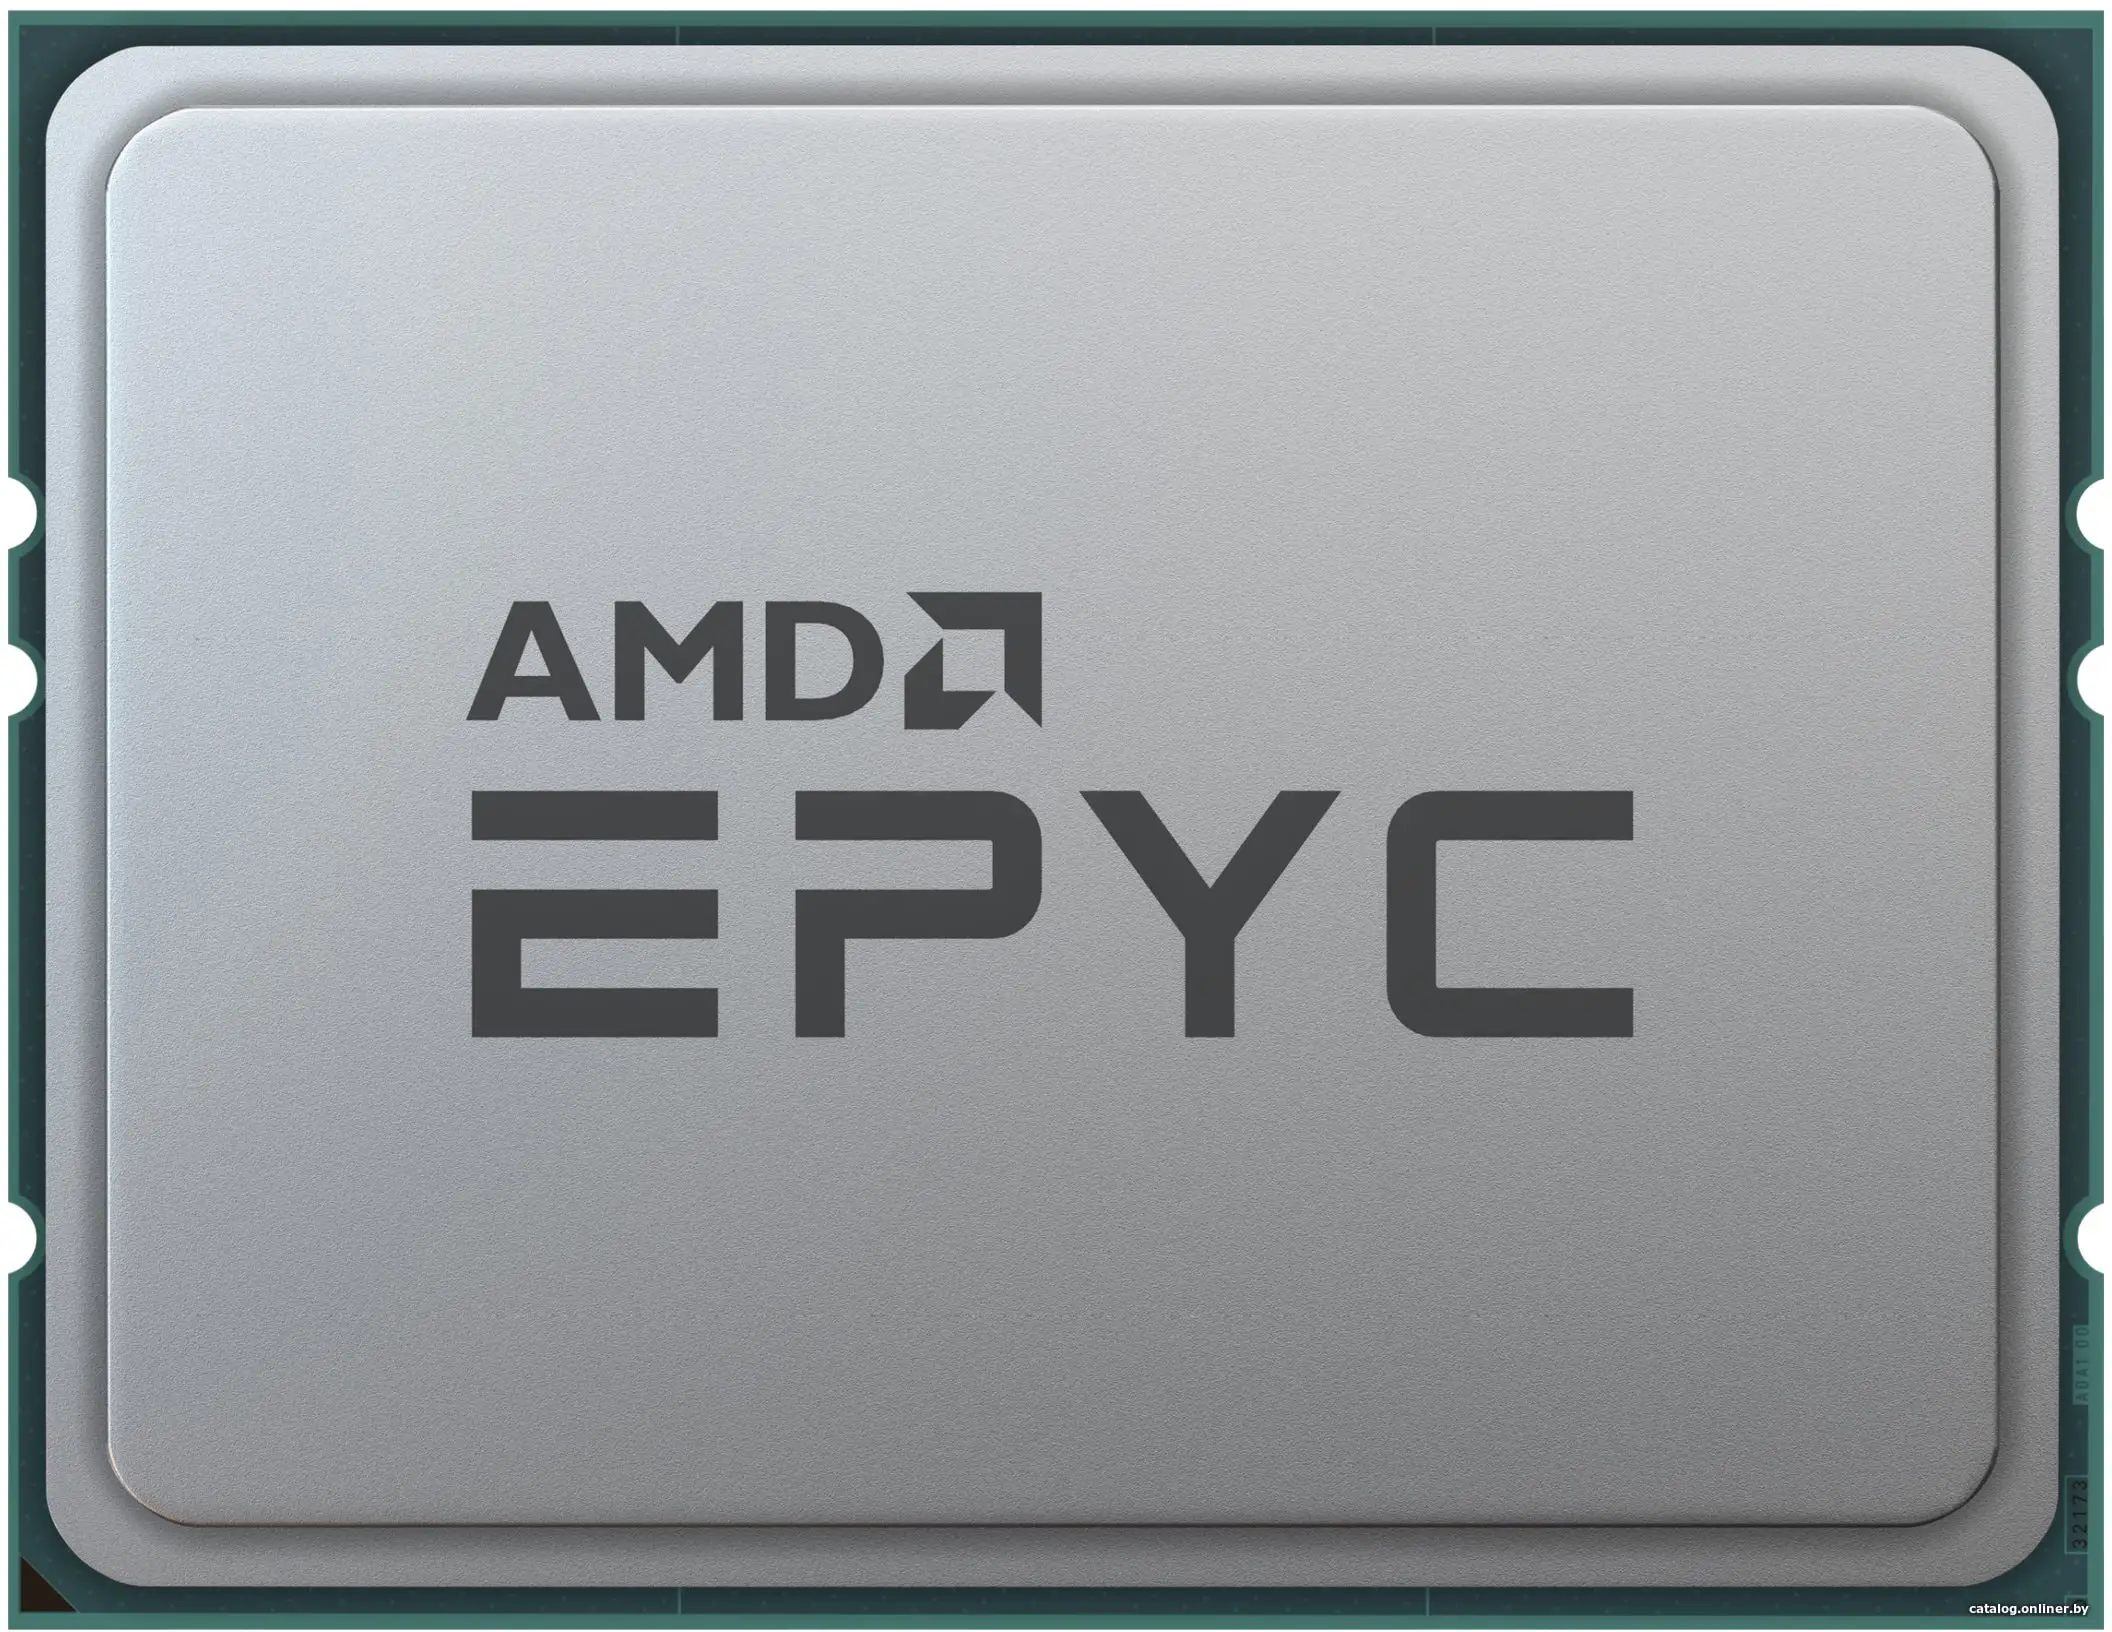 Купить AMD AMD EPYC 7713P 64 Cores, 128 Threads, 2.0/3.675GHz, 256M, DDR4-3200, 1S, 225/240W, цена, опт и розница